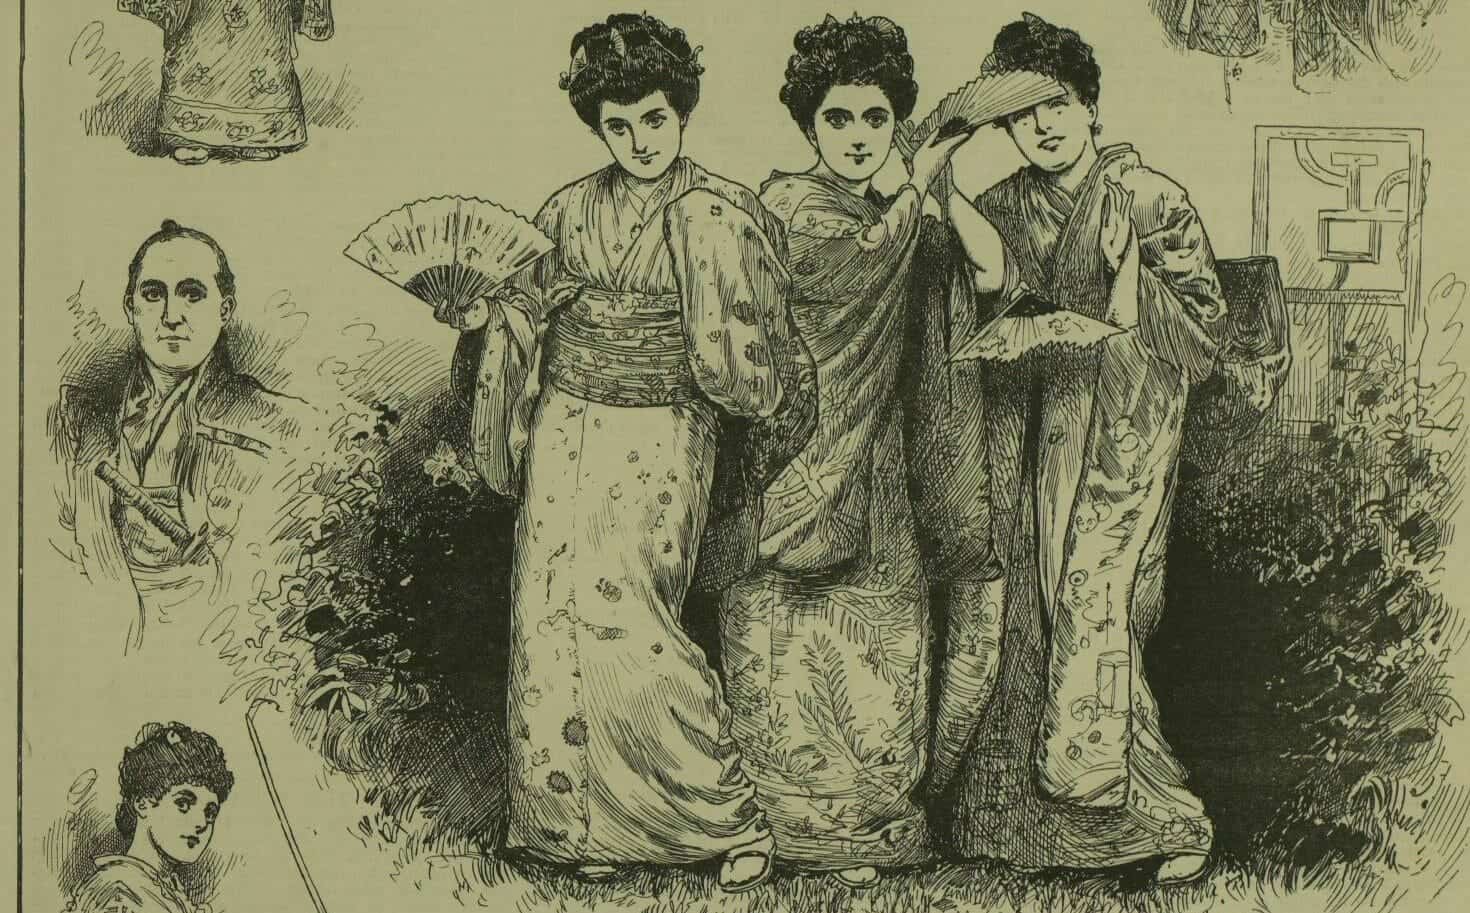 “The Mikado.” Illustrated London News, 4 Apr. 1885